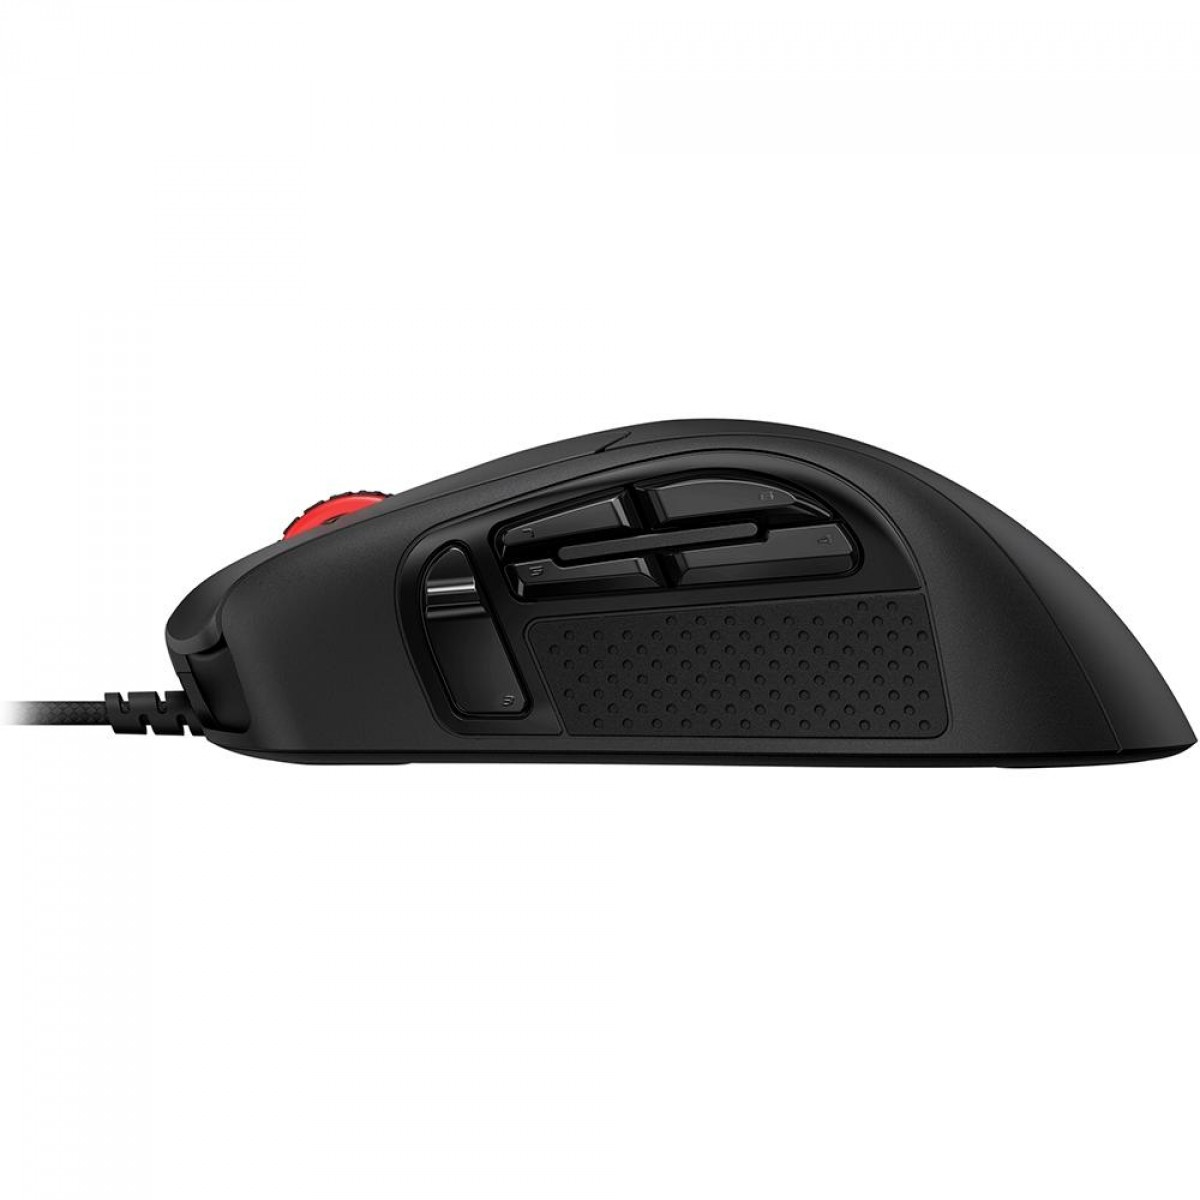 Mouse Gamer HyperX Pulsefire Raid RGB, 16000 DPI, 11 botões programáveis, USB, Black, HX-MC005B